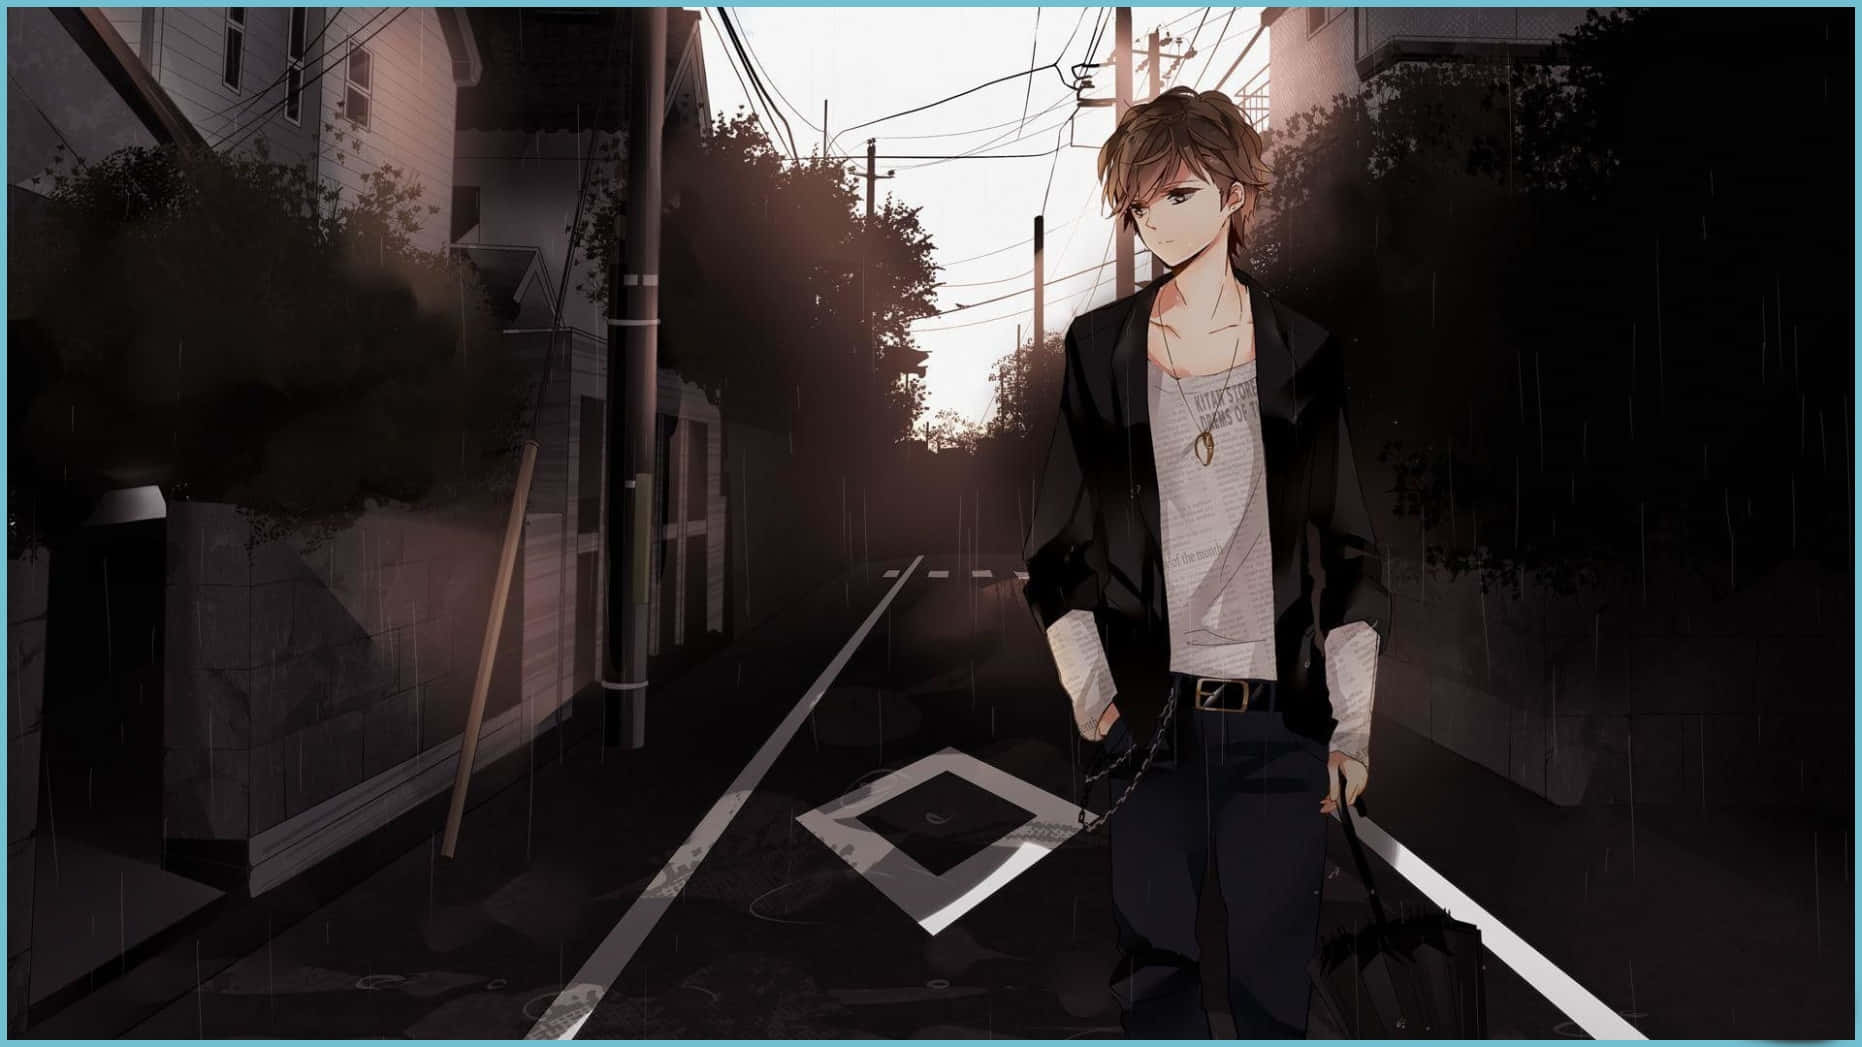 Sad Depressing Anime Teenage Boy Walking Street Background